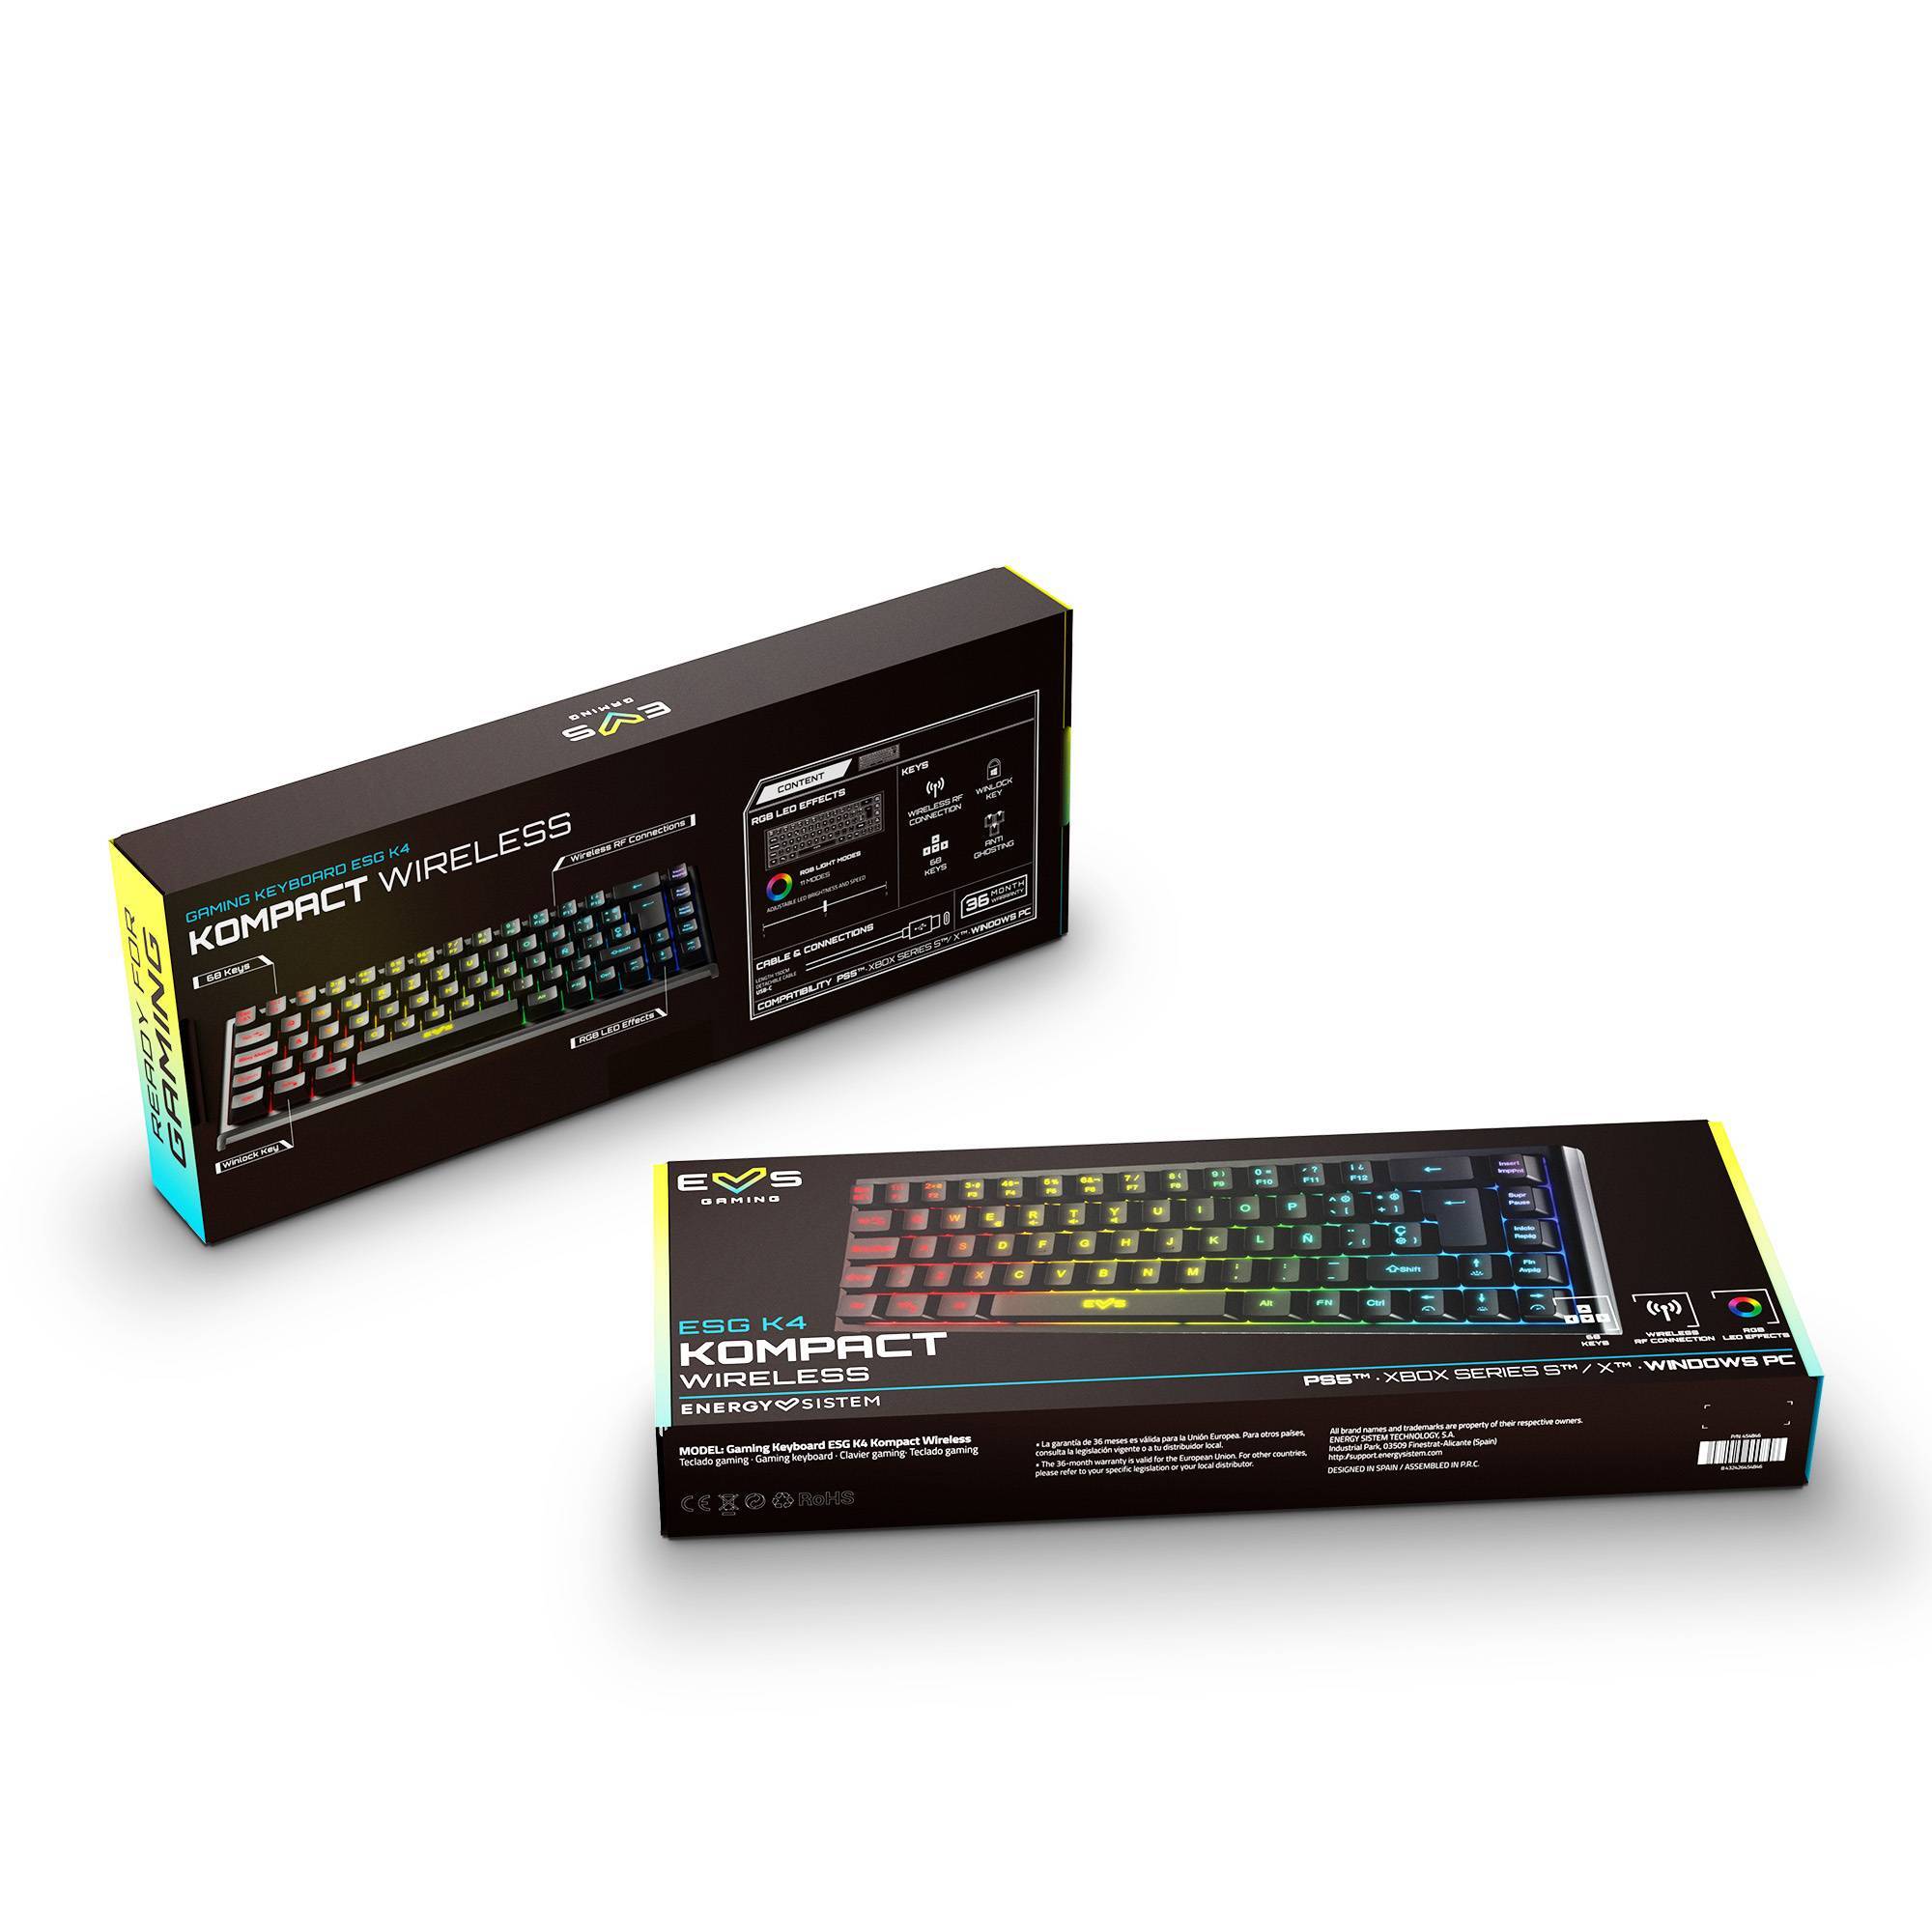 ESG K4 KOMPACT-WIRELESS gaming keyboard's packaging